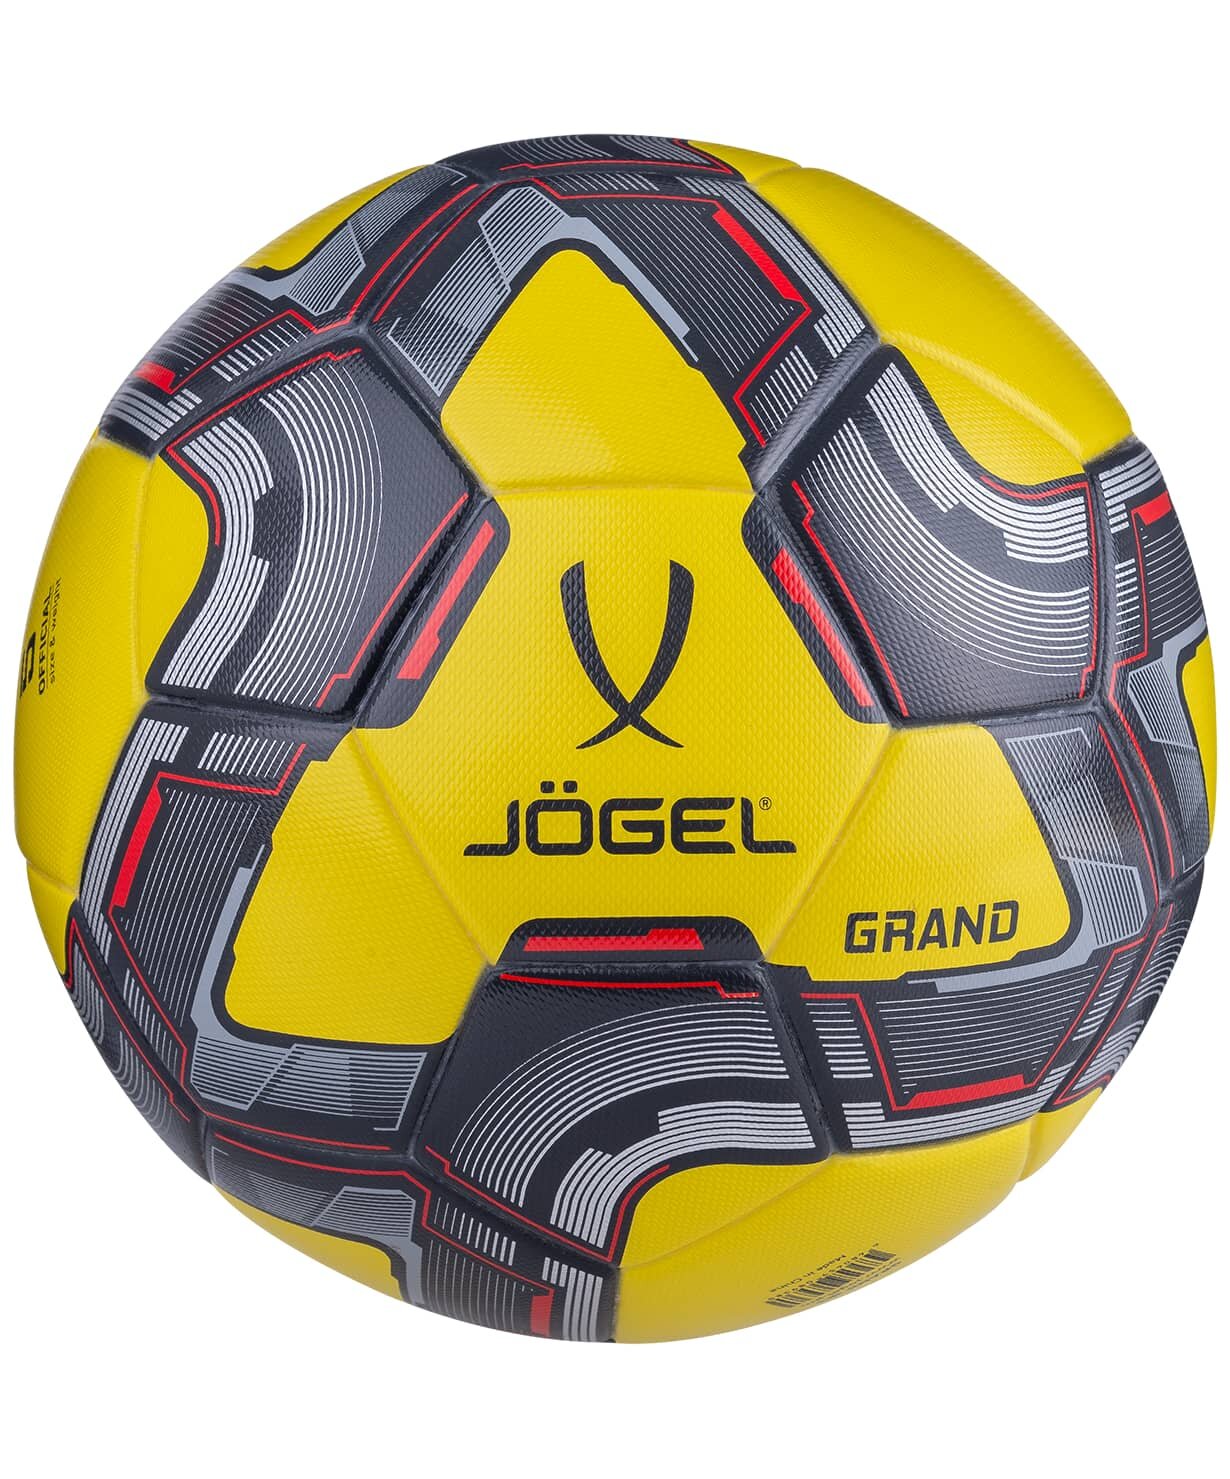 Футбольный мяч Jogel GRAND 5 Желтый арт. УТ-00016944 р.5 Желтый/Серый/Красный